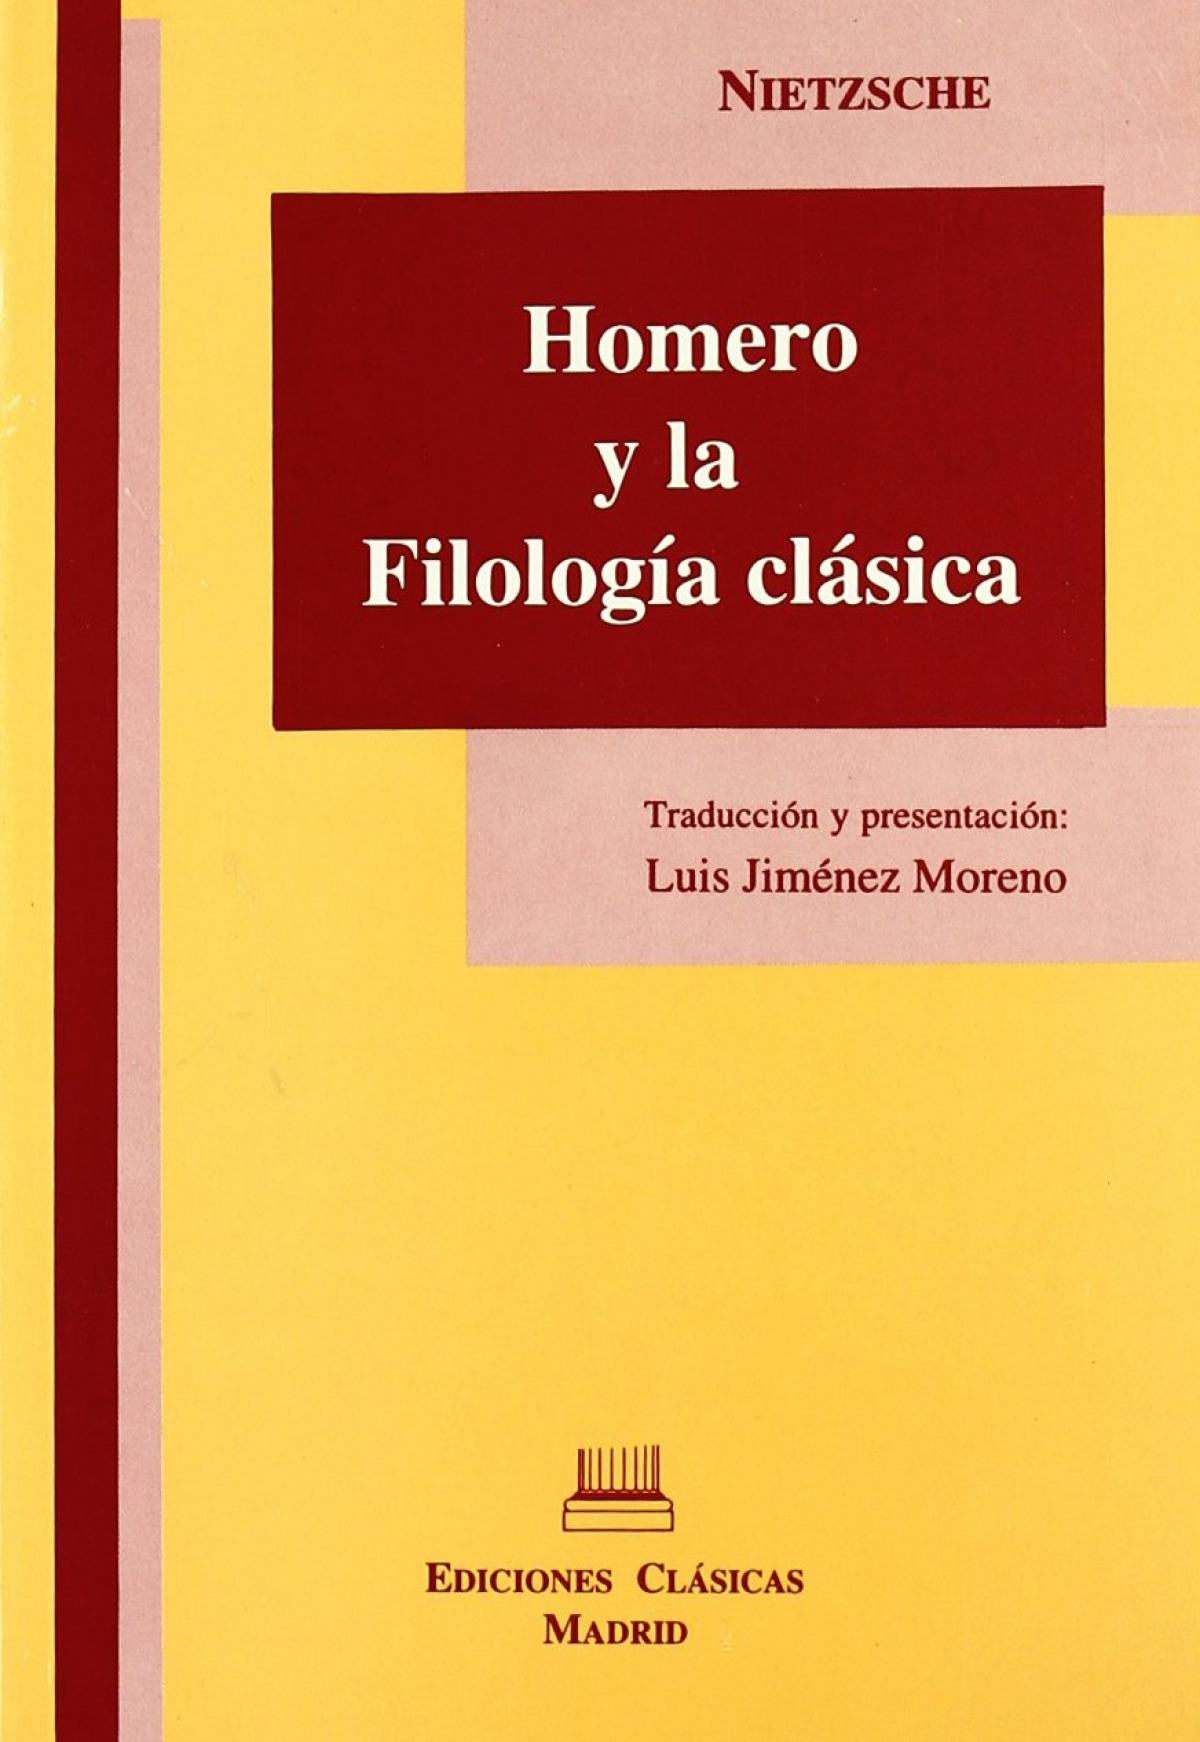 Homero y la filologia clásica - Nietzsche, Friedrich